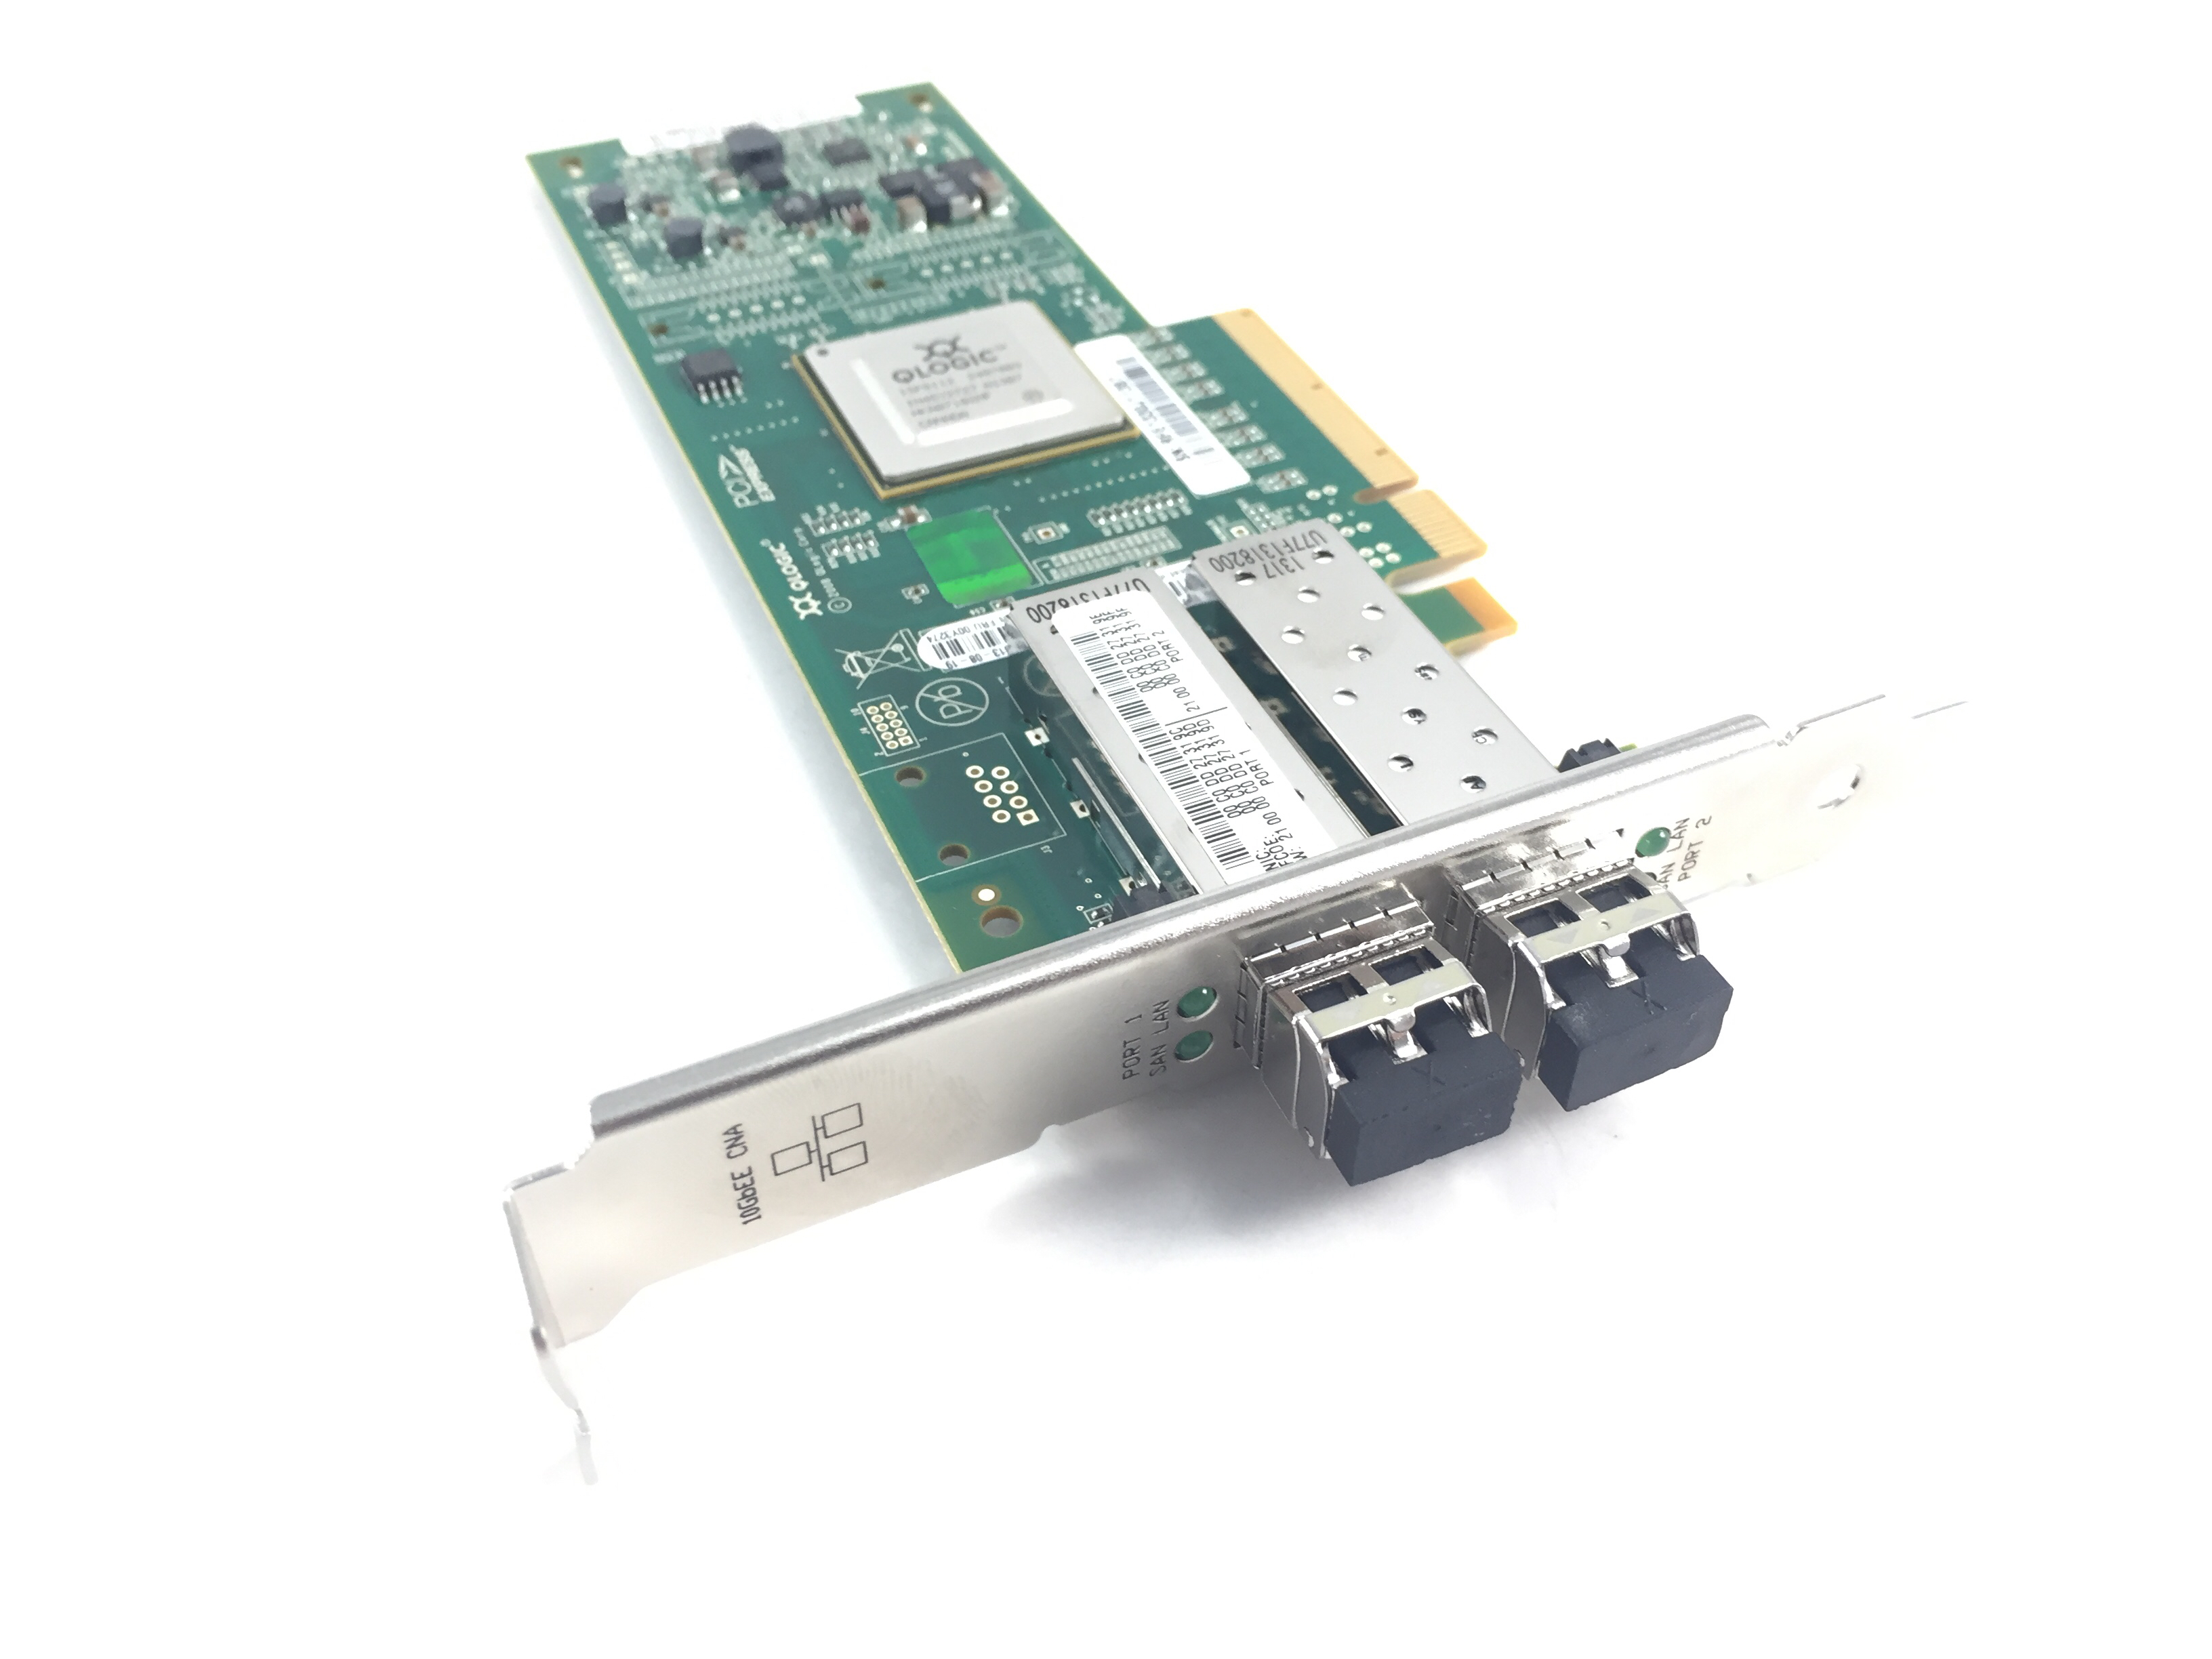 IBM Qlogic Qle8142 10GB Dual Port PCI-E Network Card w/ Transceiver (00Y3274)